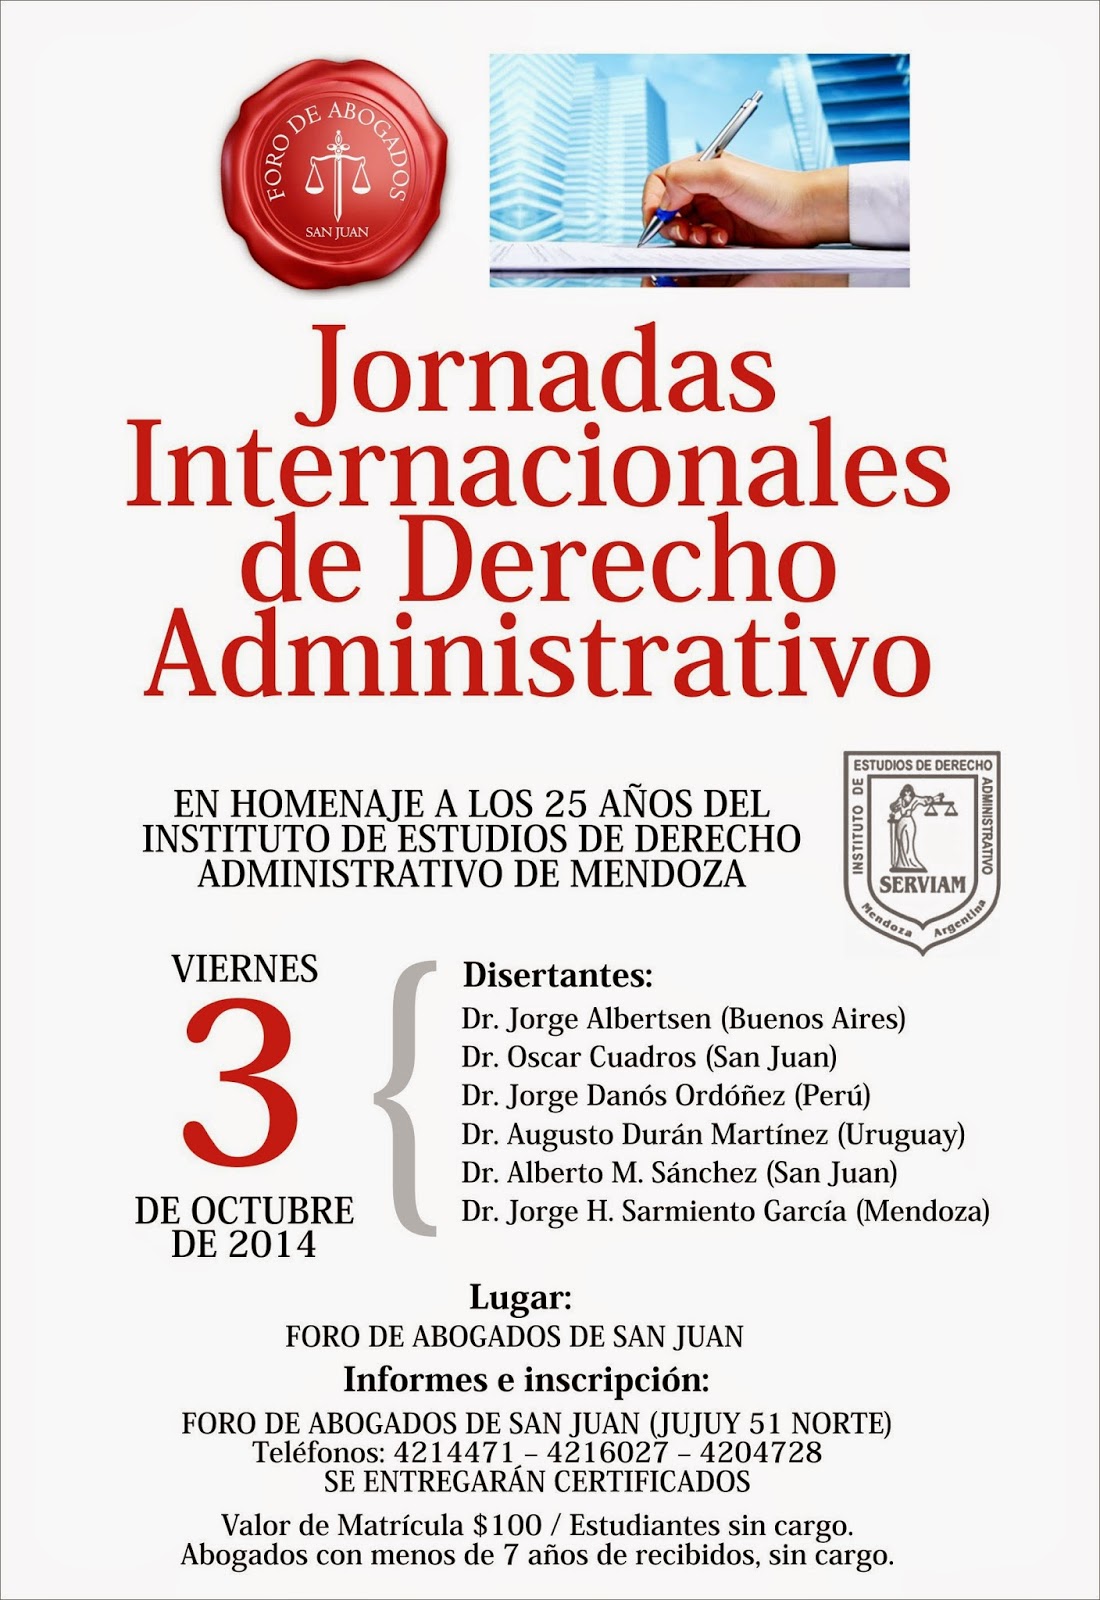 http://www.foroabogadossanjuan.org.ar/jornadas-internacionales-de-derecho-administrativo-03-10-14/